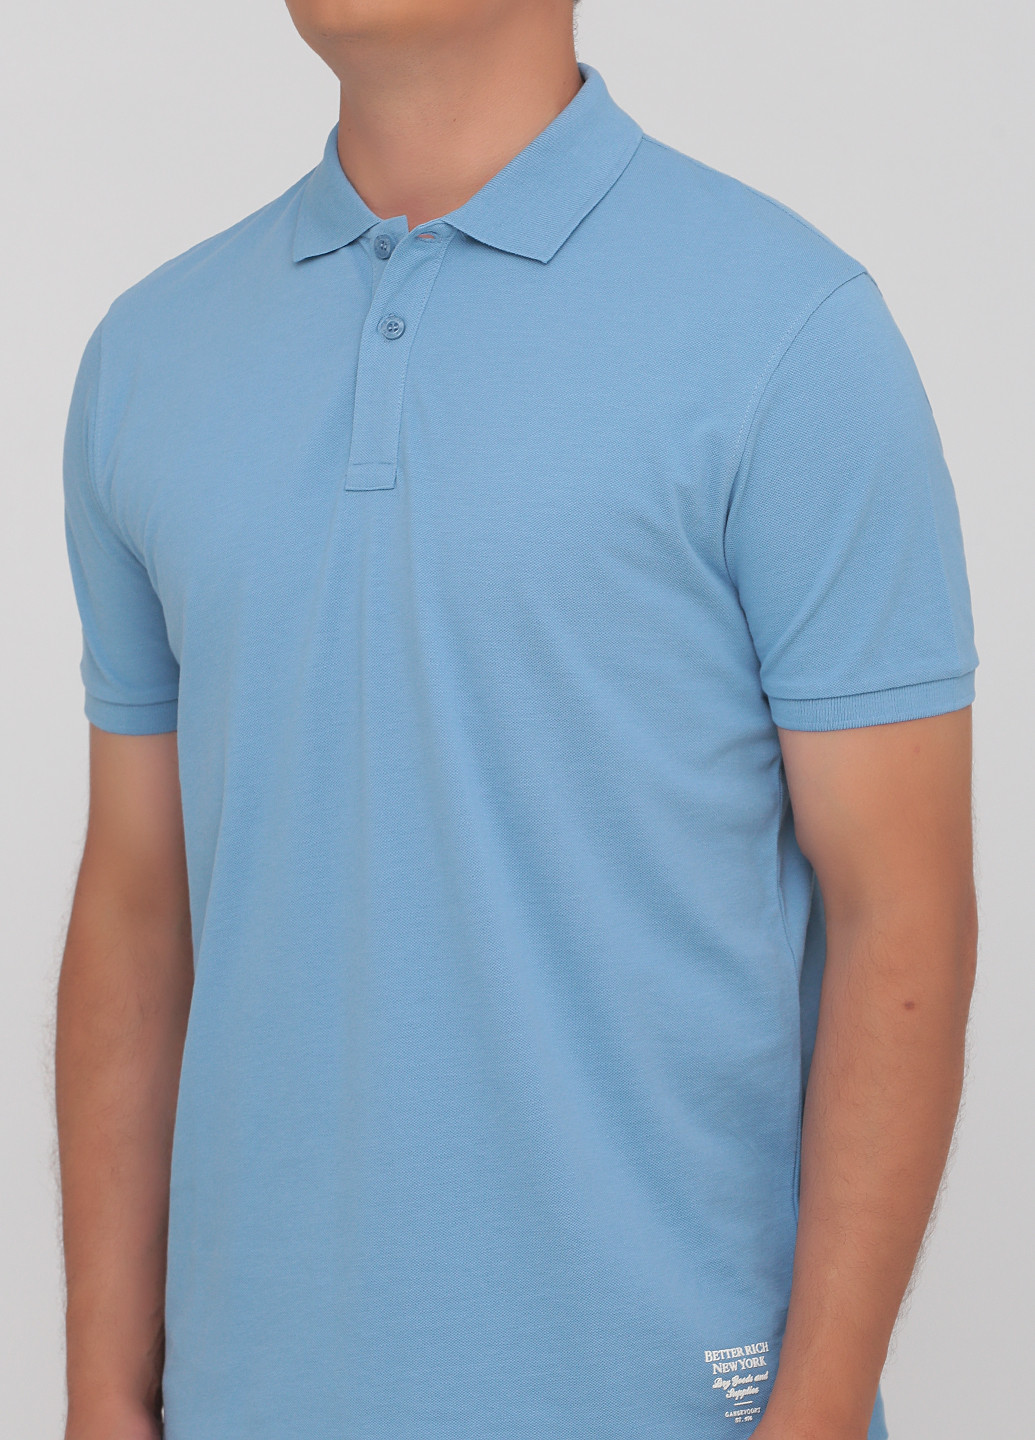 Голубой футболка-поло для мужчин Better Rich однотонная